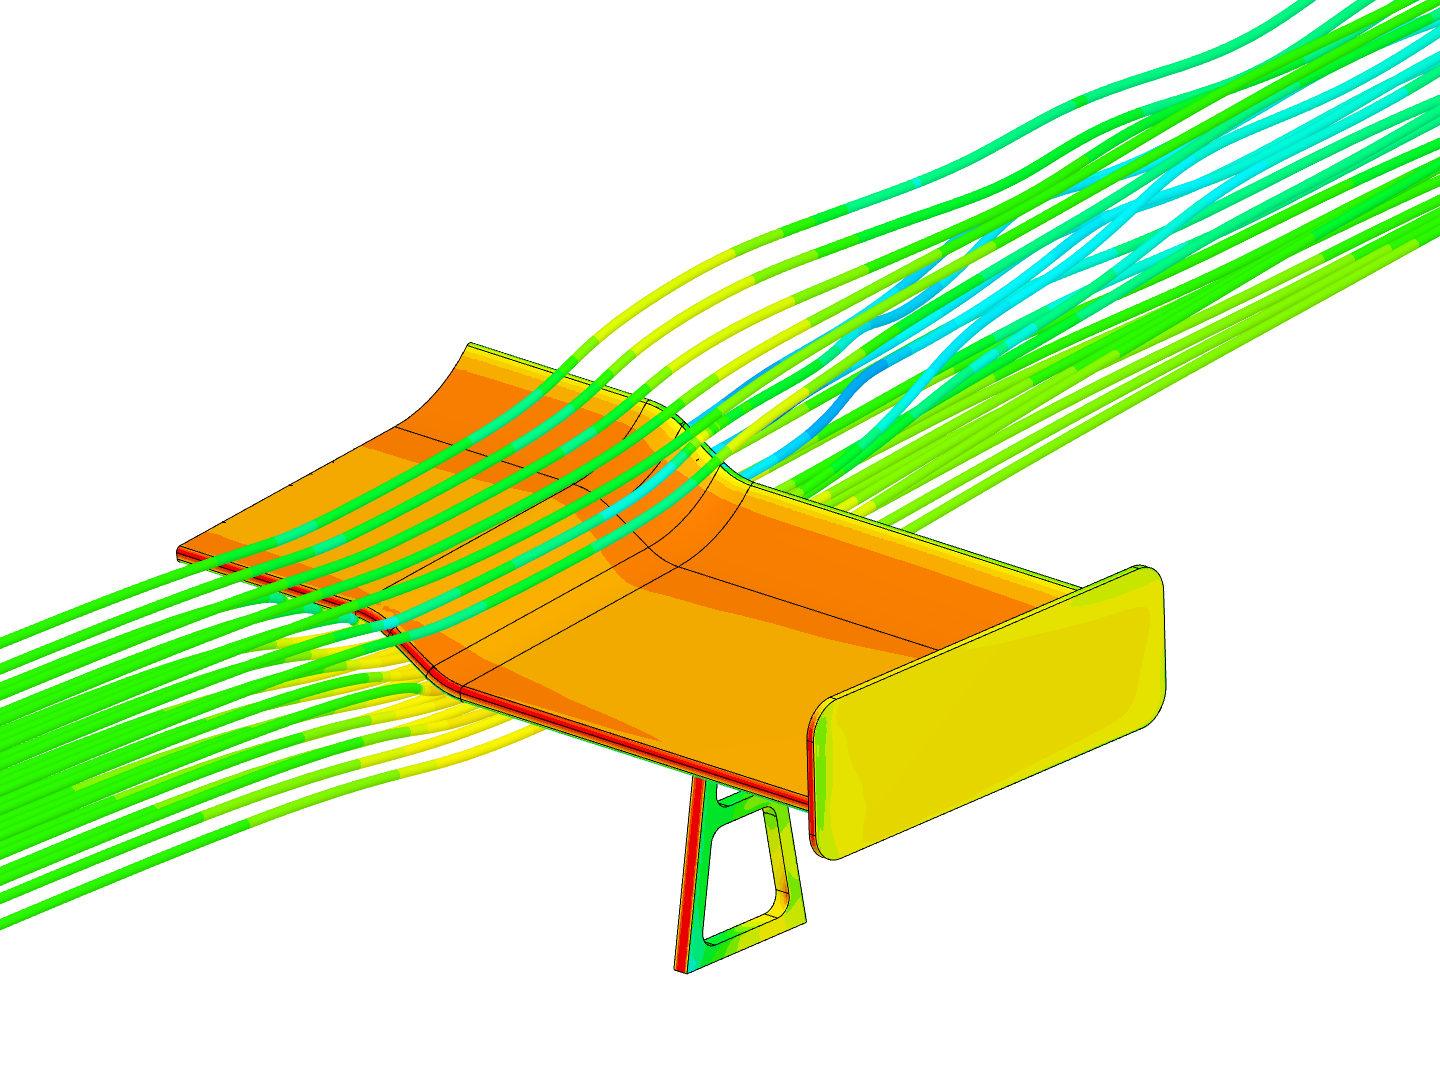 Airflow in Car spolier image